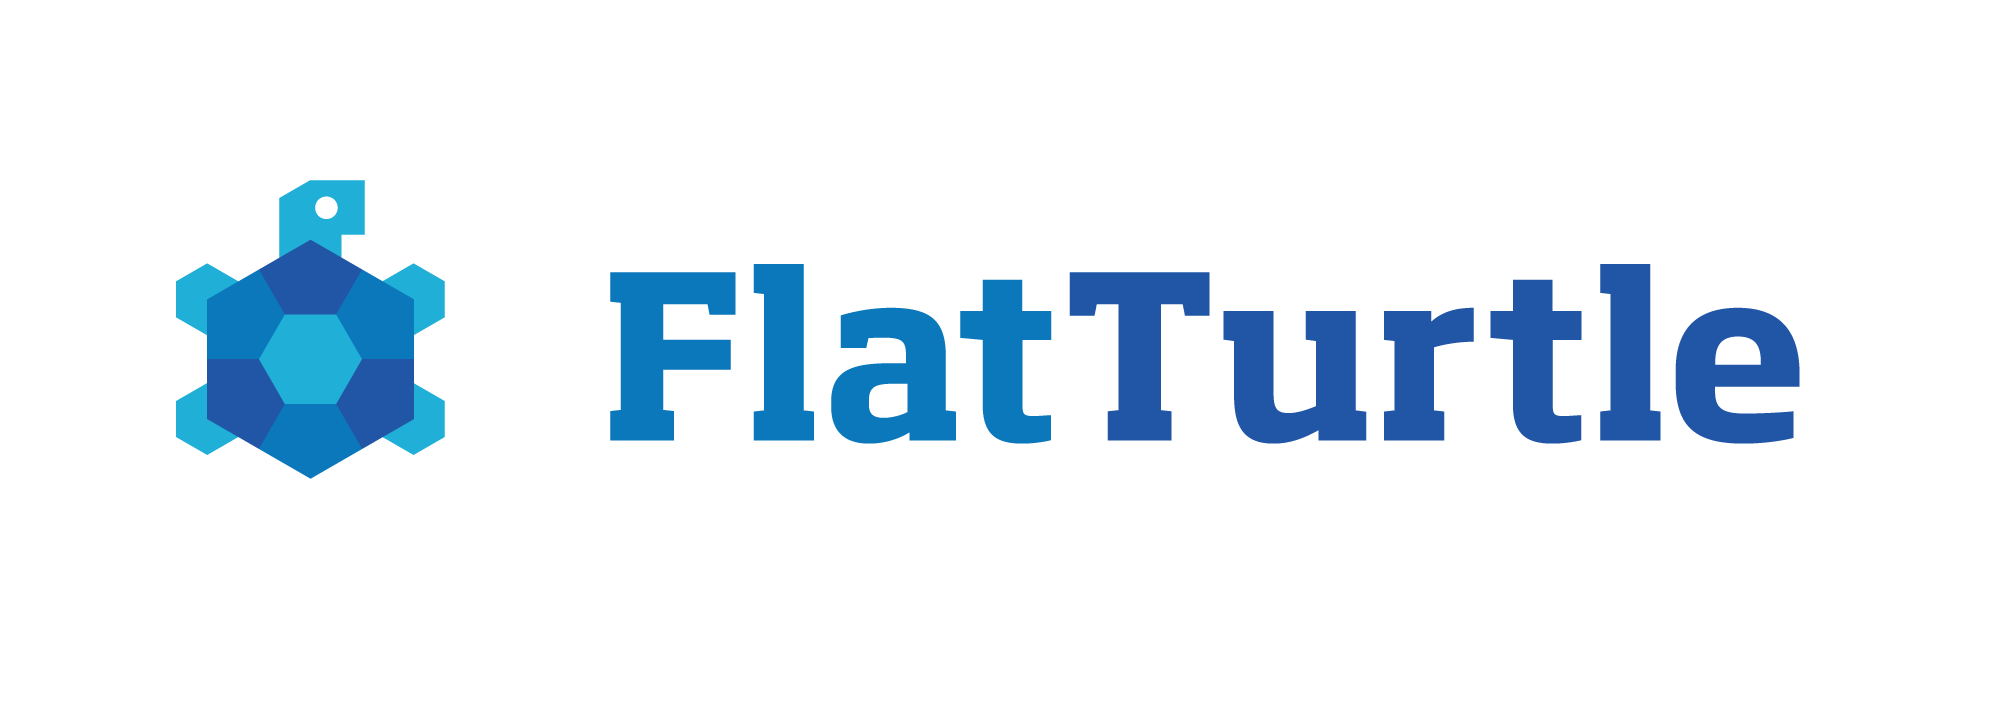 Flatturtle